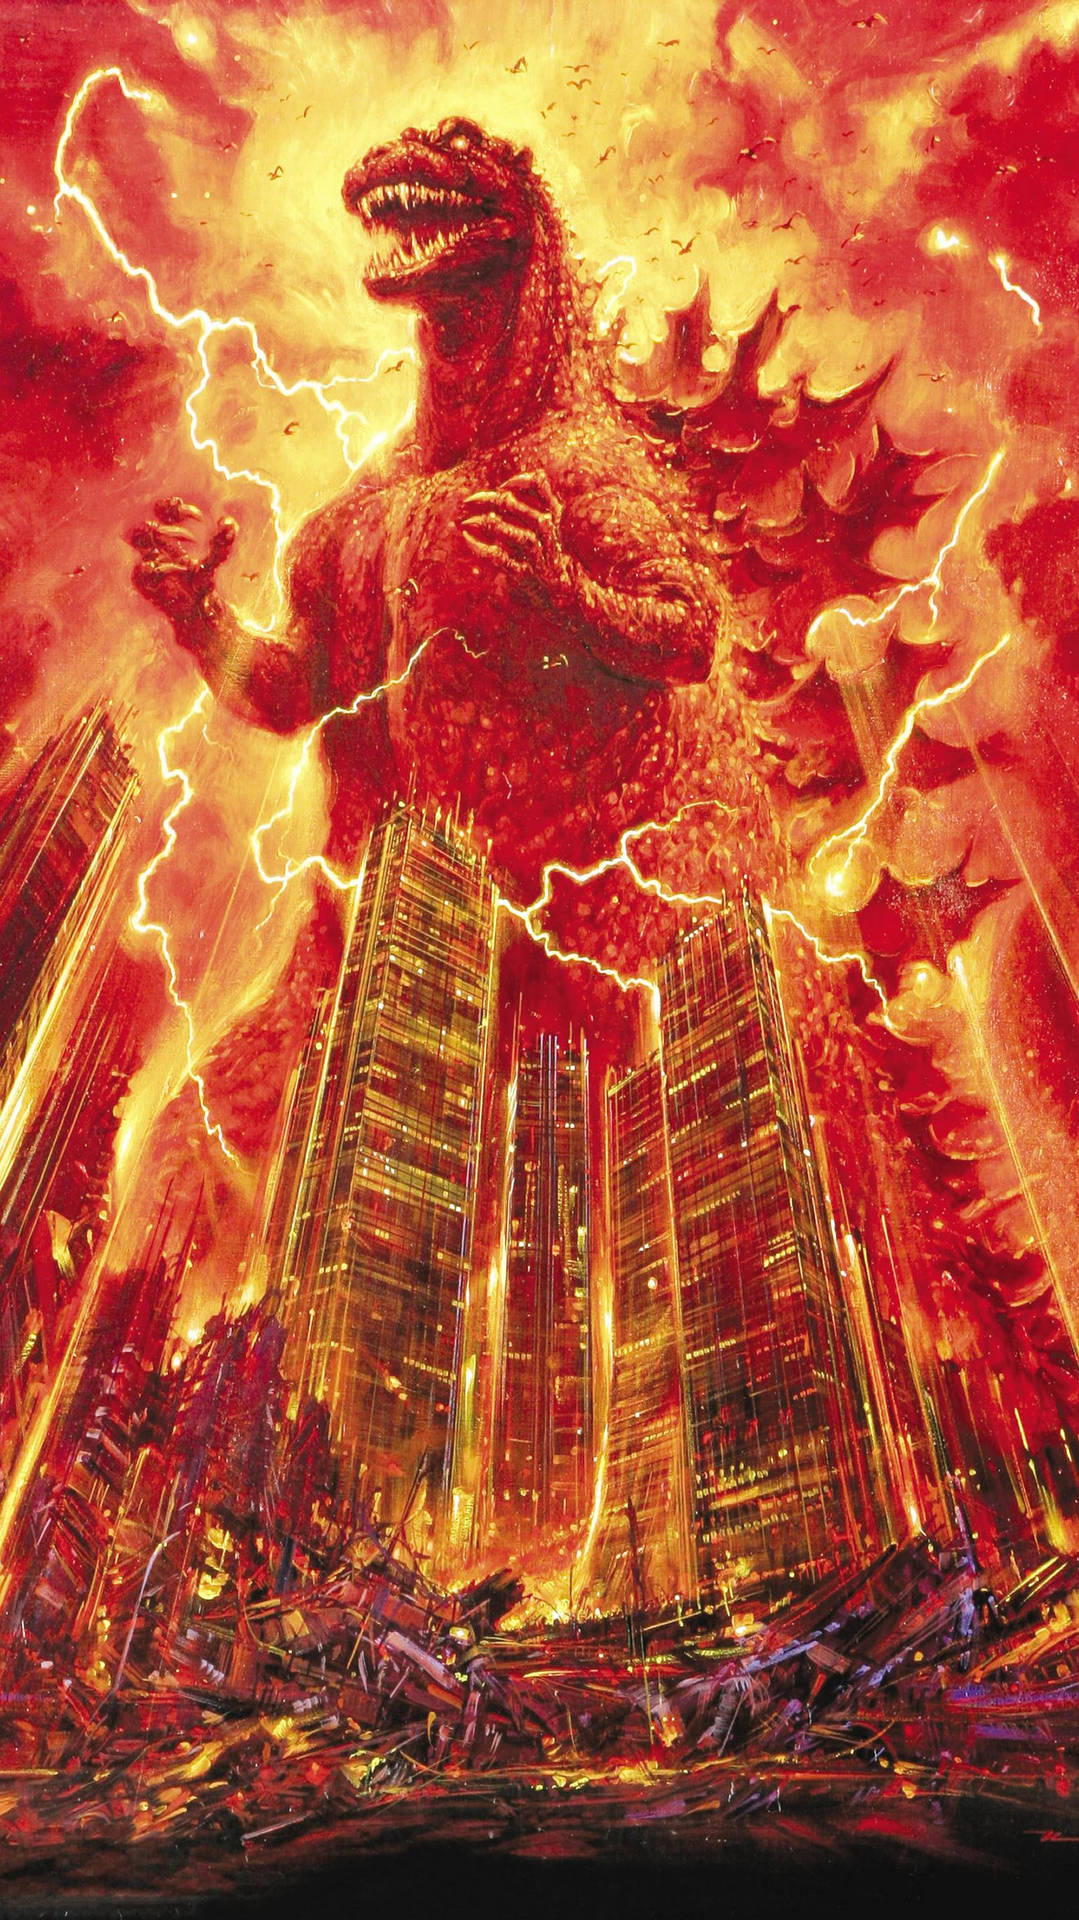 Rising From The Depths - Shin Godzilla